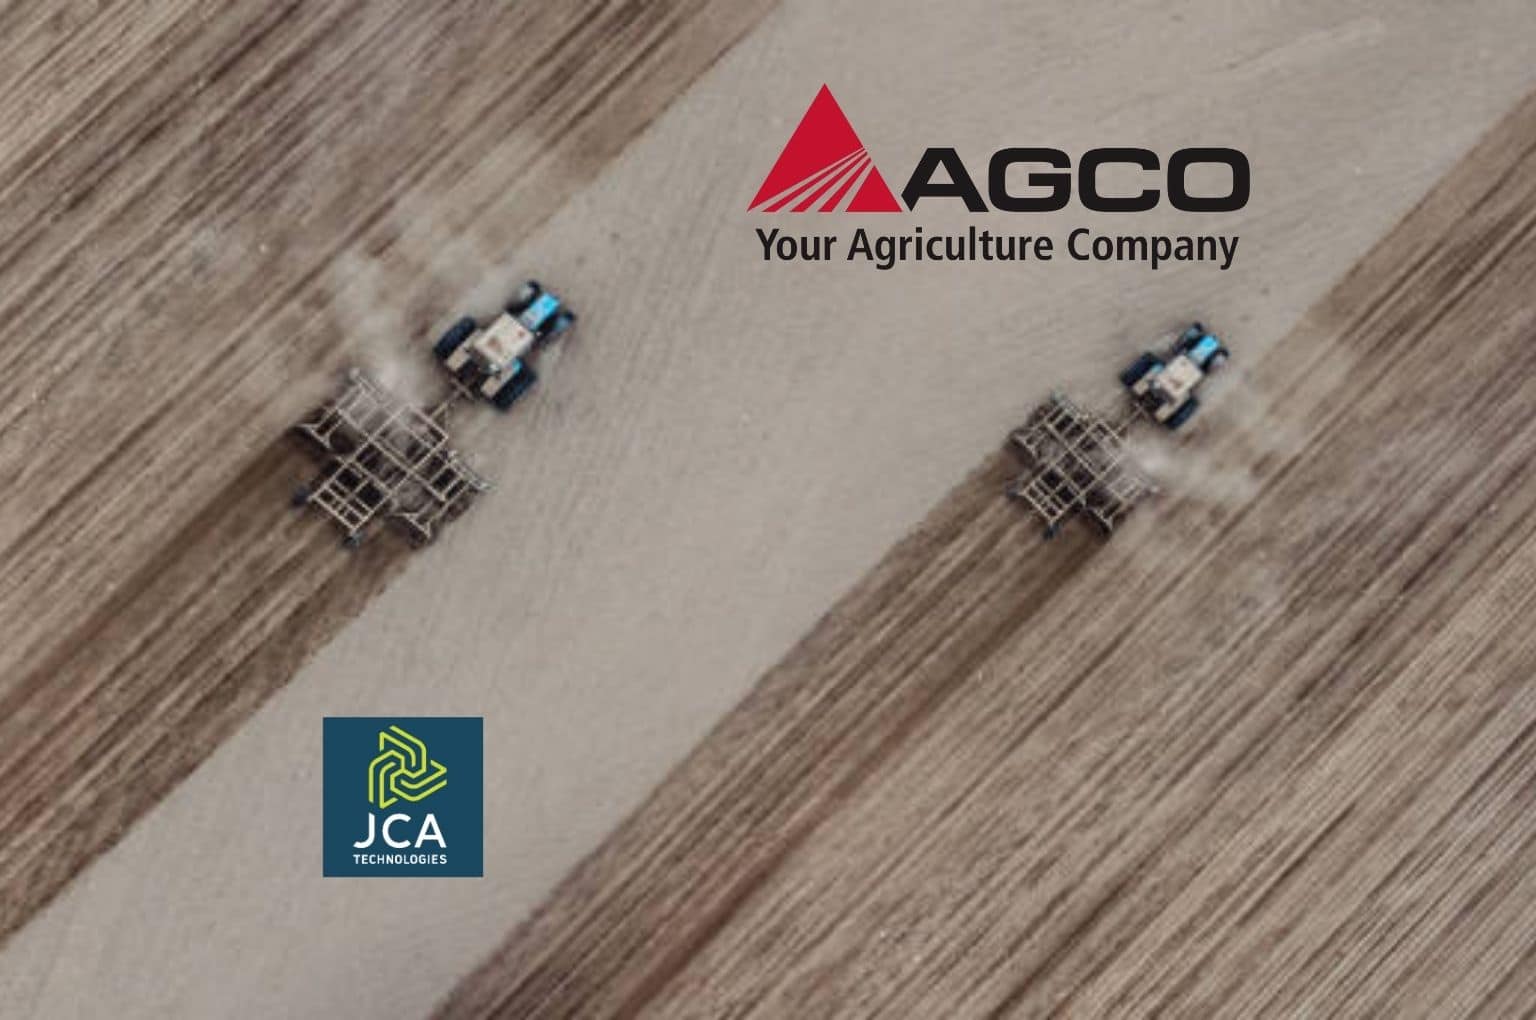 AGCO Acquires JCA Technologies